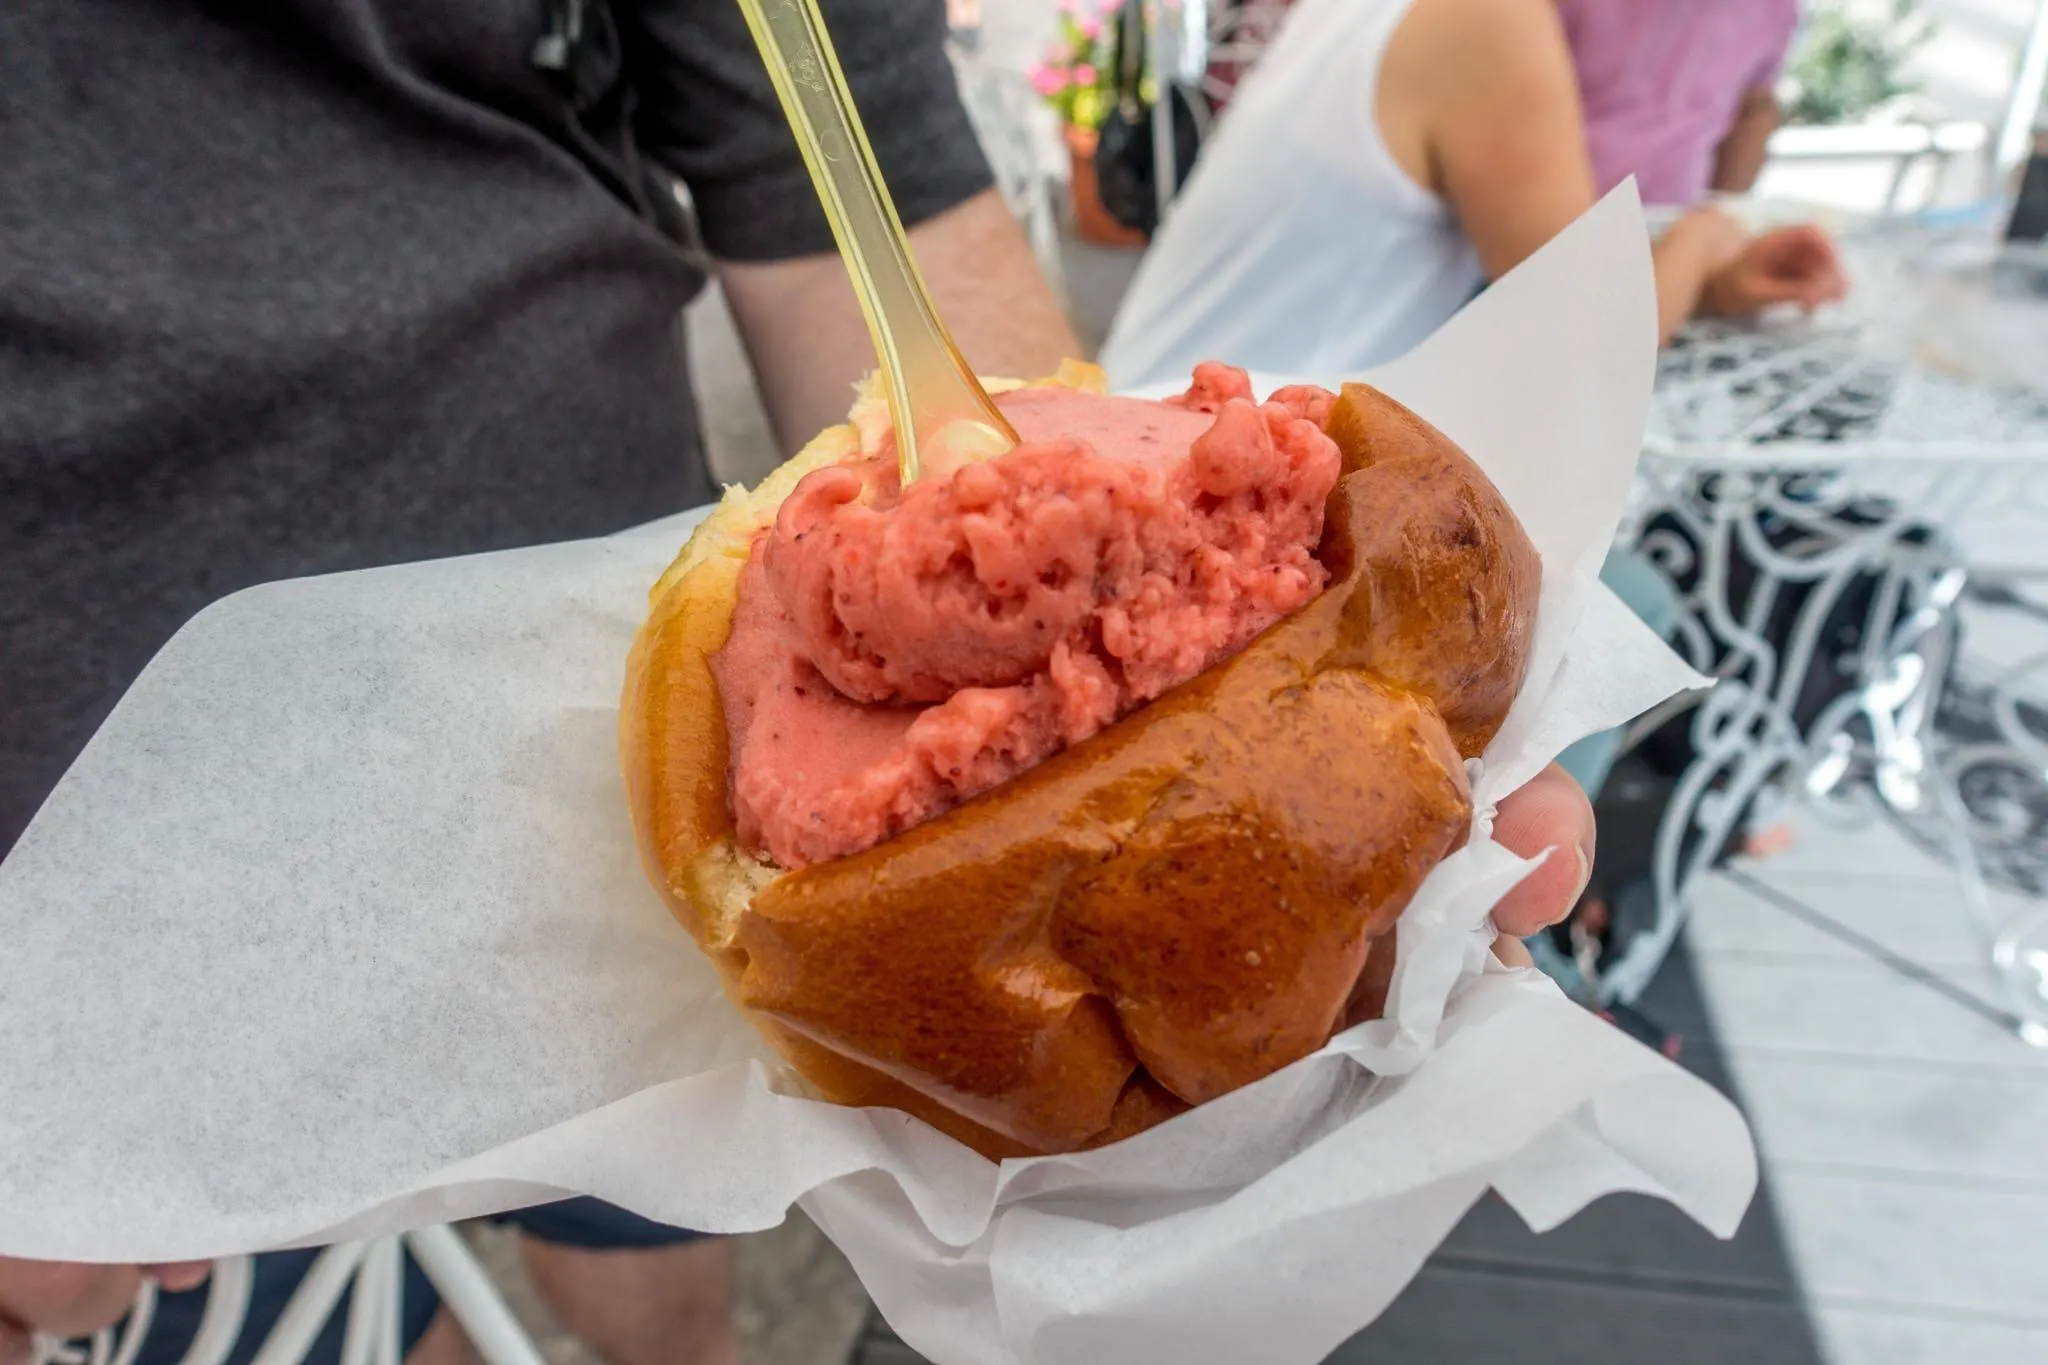 Strawberry gelato stuffed inside a brioche roll